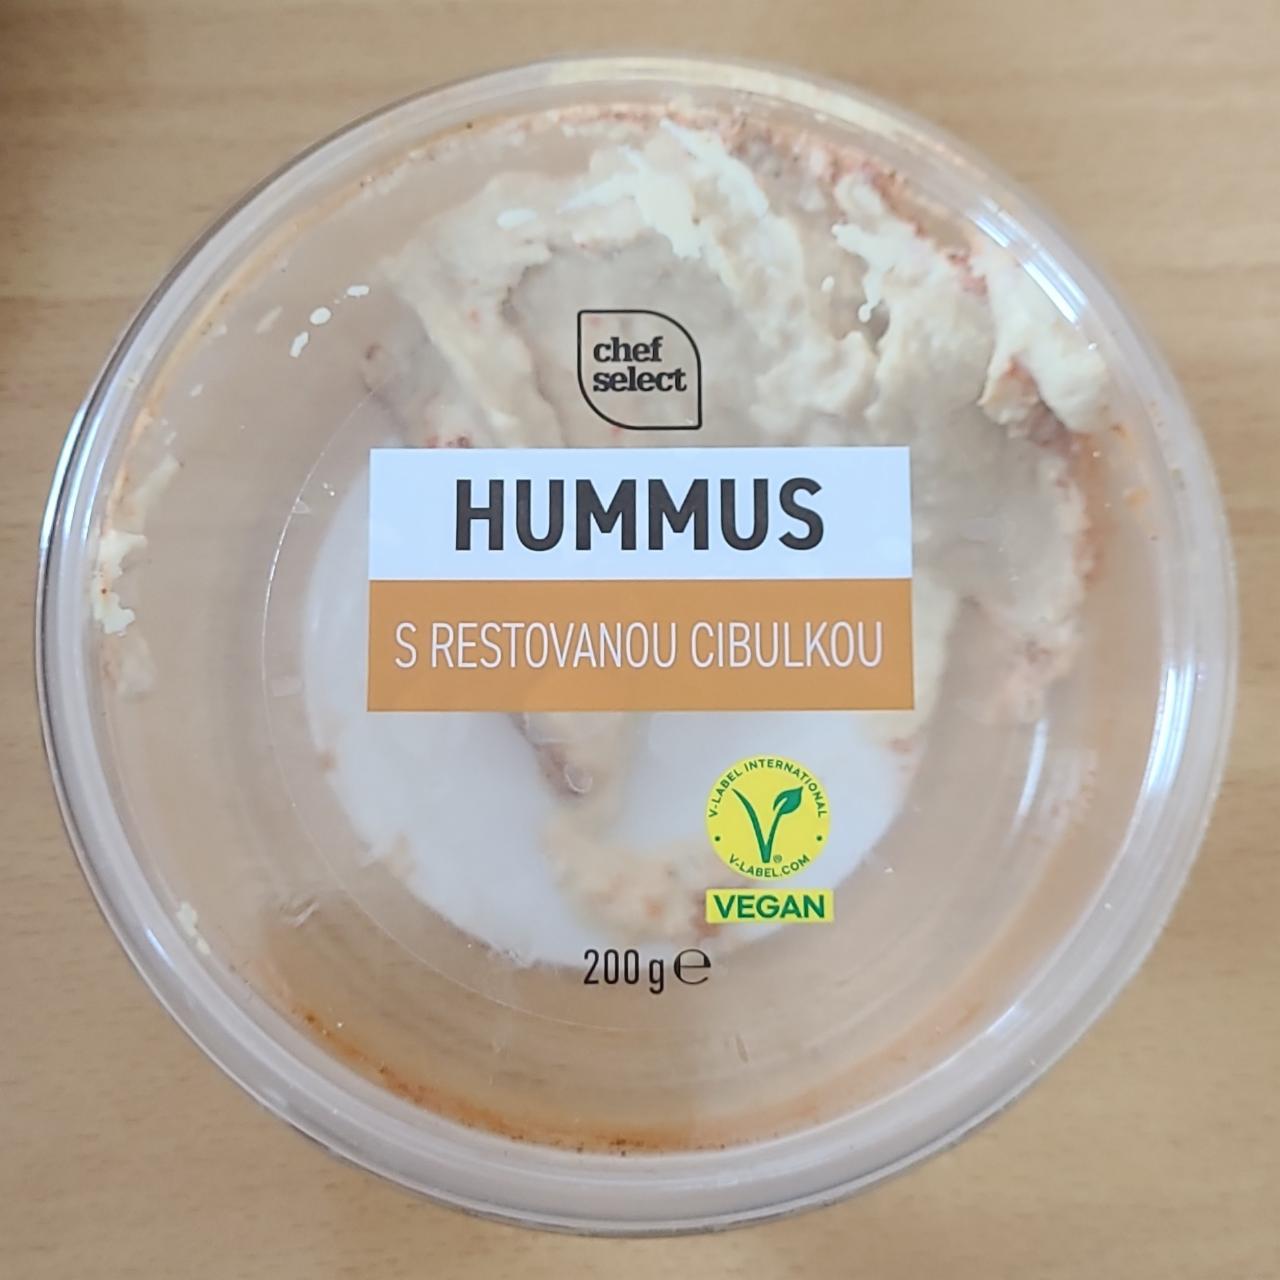 Fotografie - Hummus s restovanou cibulkou Chef Select